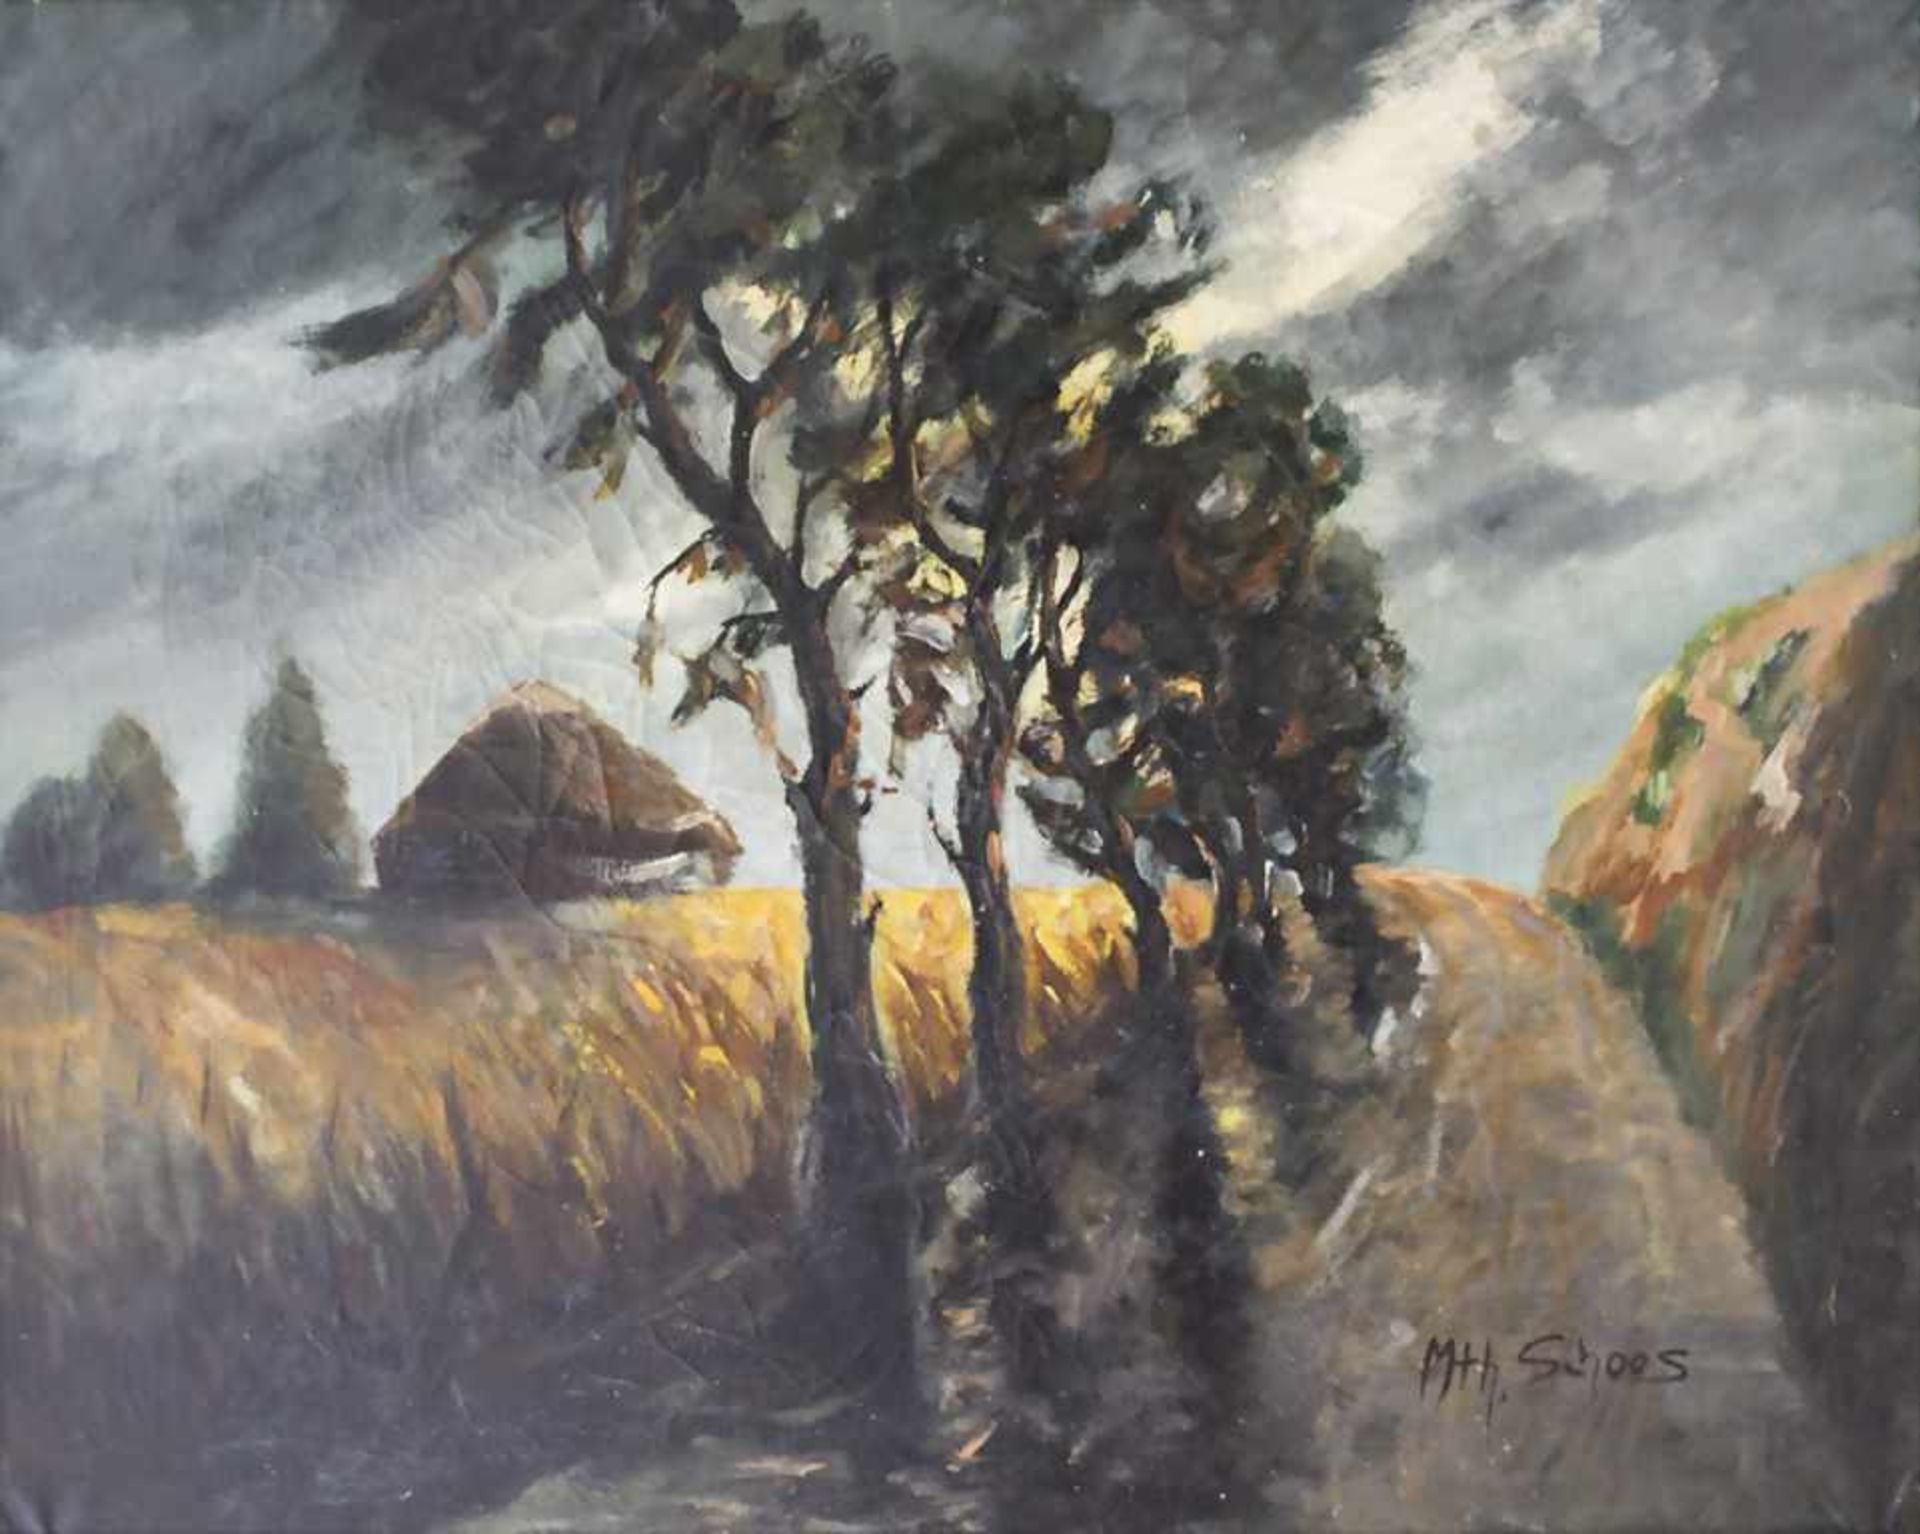 Mth. Schoos (20. Jh.), 'Kornfeld mit aufkommendem Gewitter' / 'A cornfield with upcoming storm'